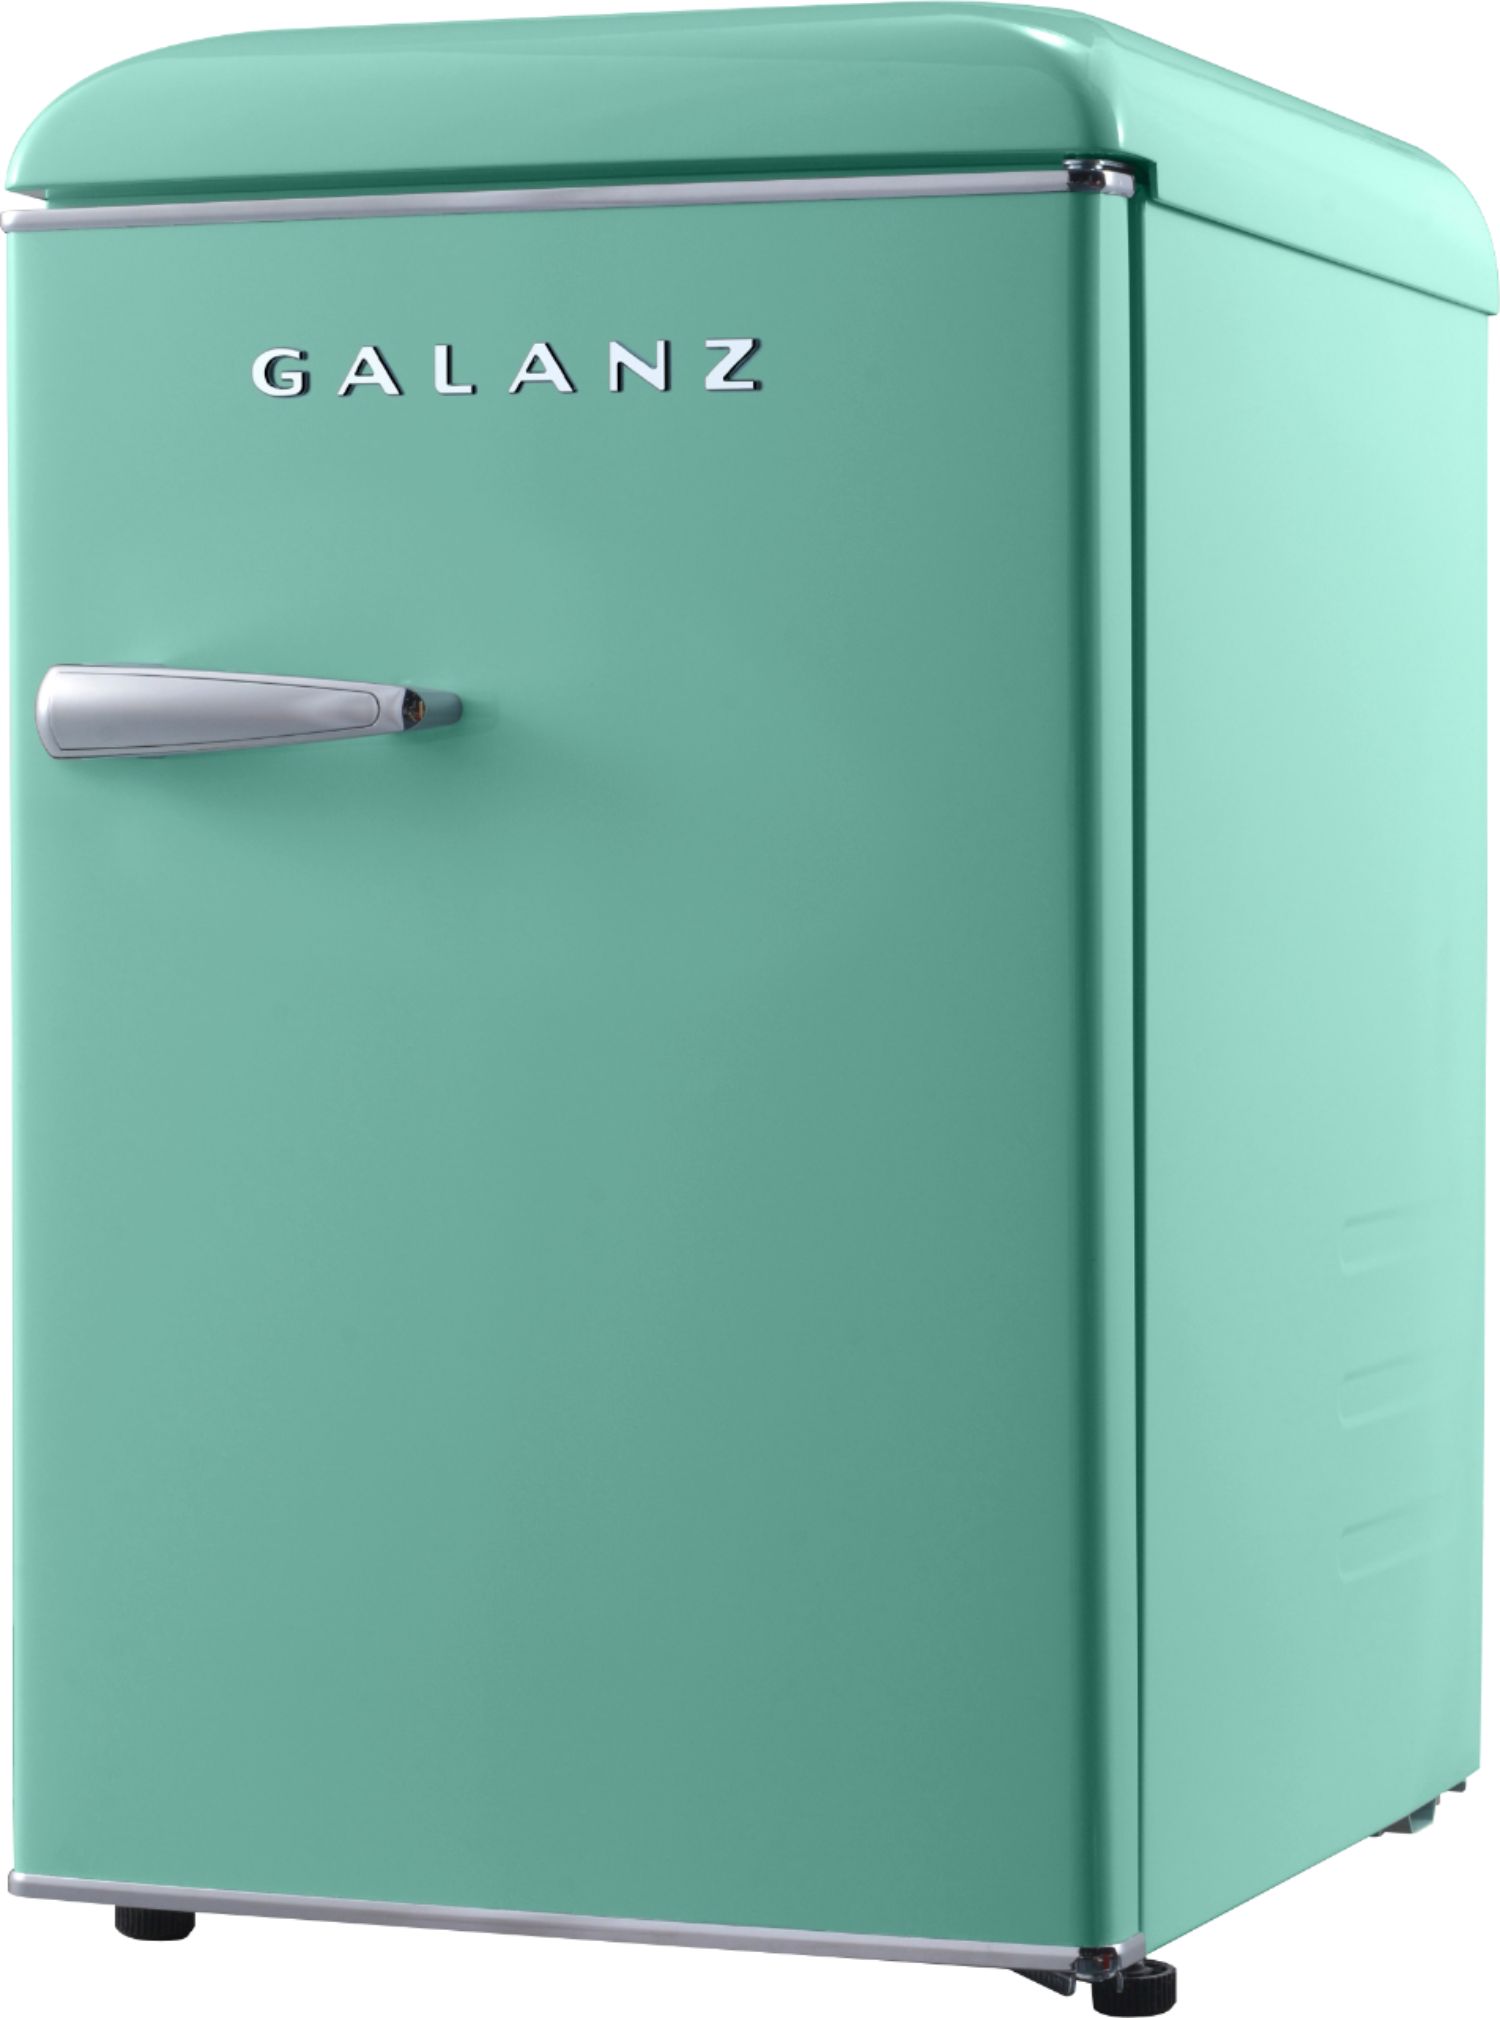 Best Buy: Galanz Retro 3.1 Cu. Ft Mini Fridge Green GLR31TGNER